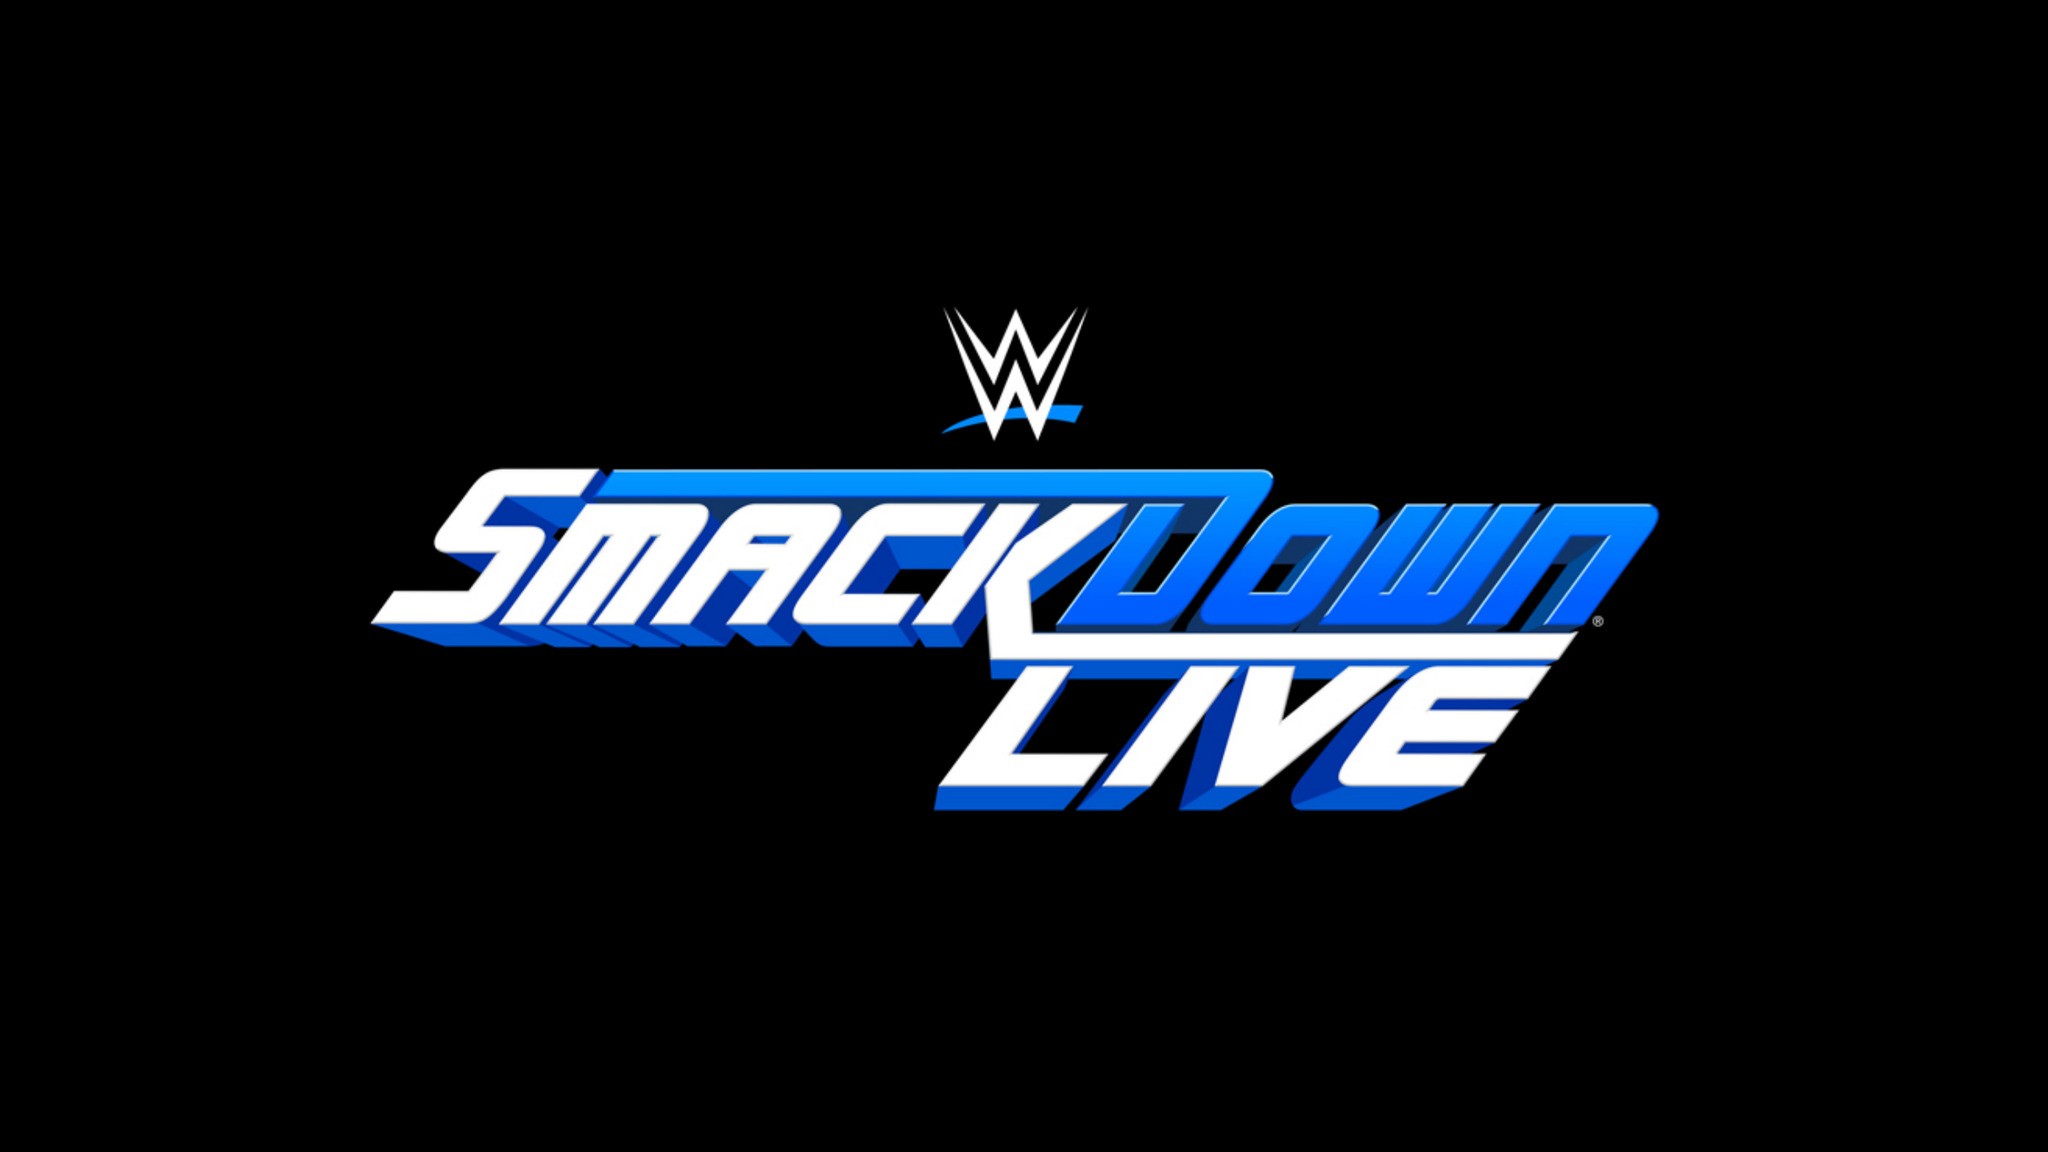 WWE SmackDown Live Logo